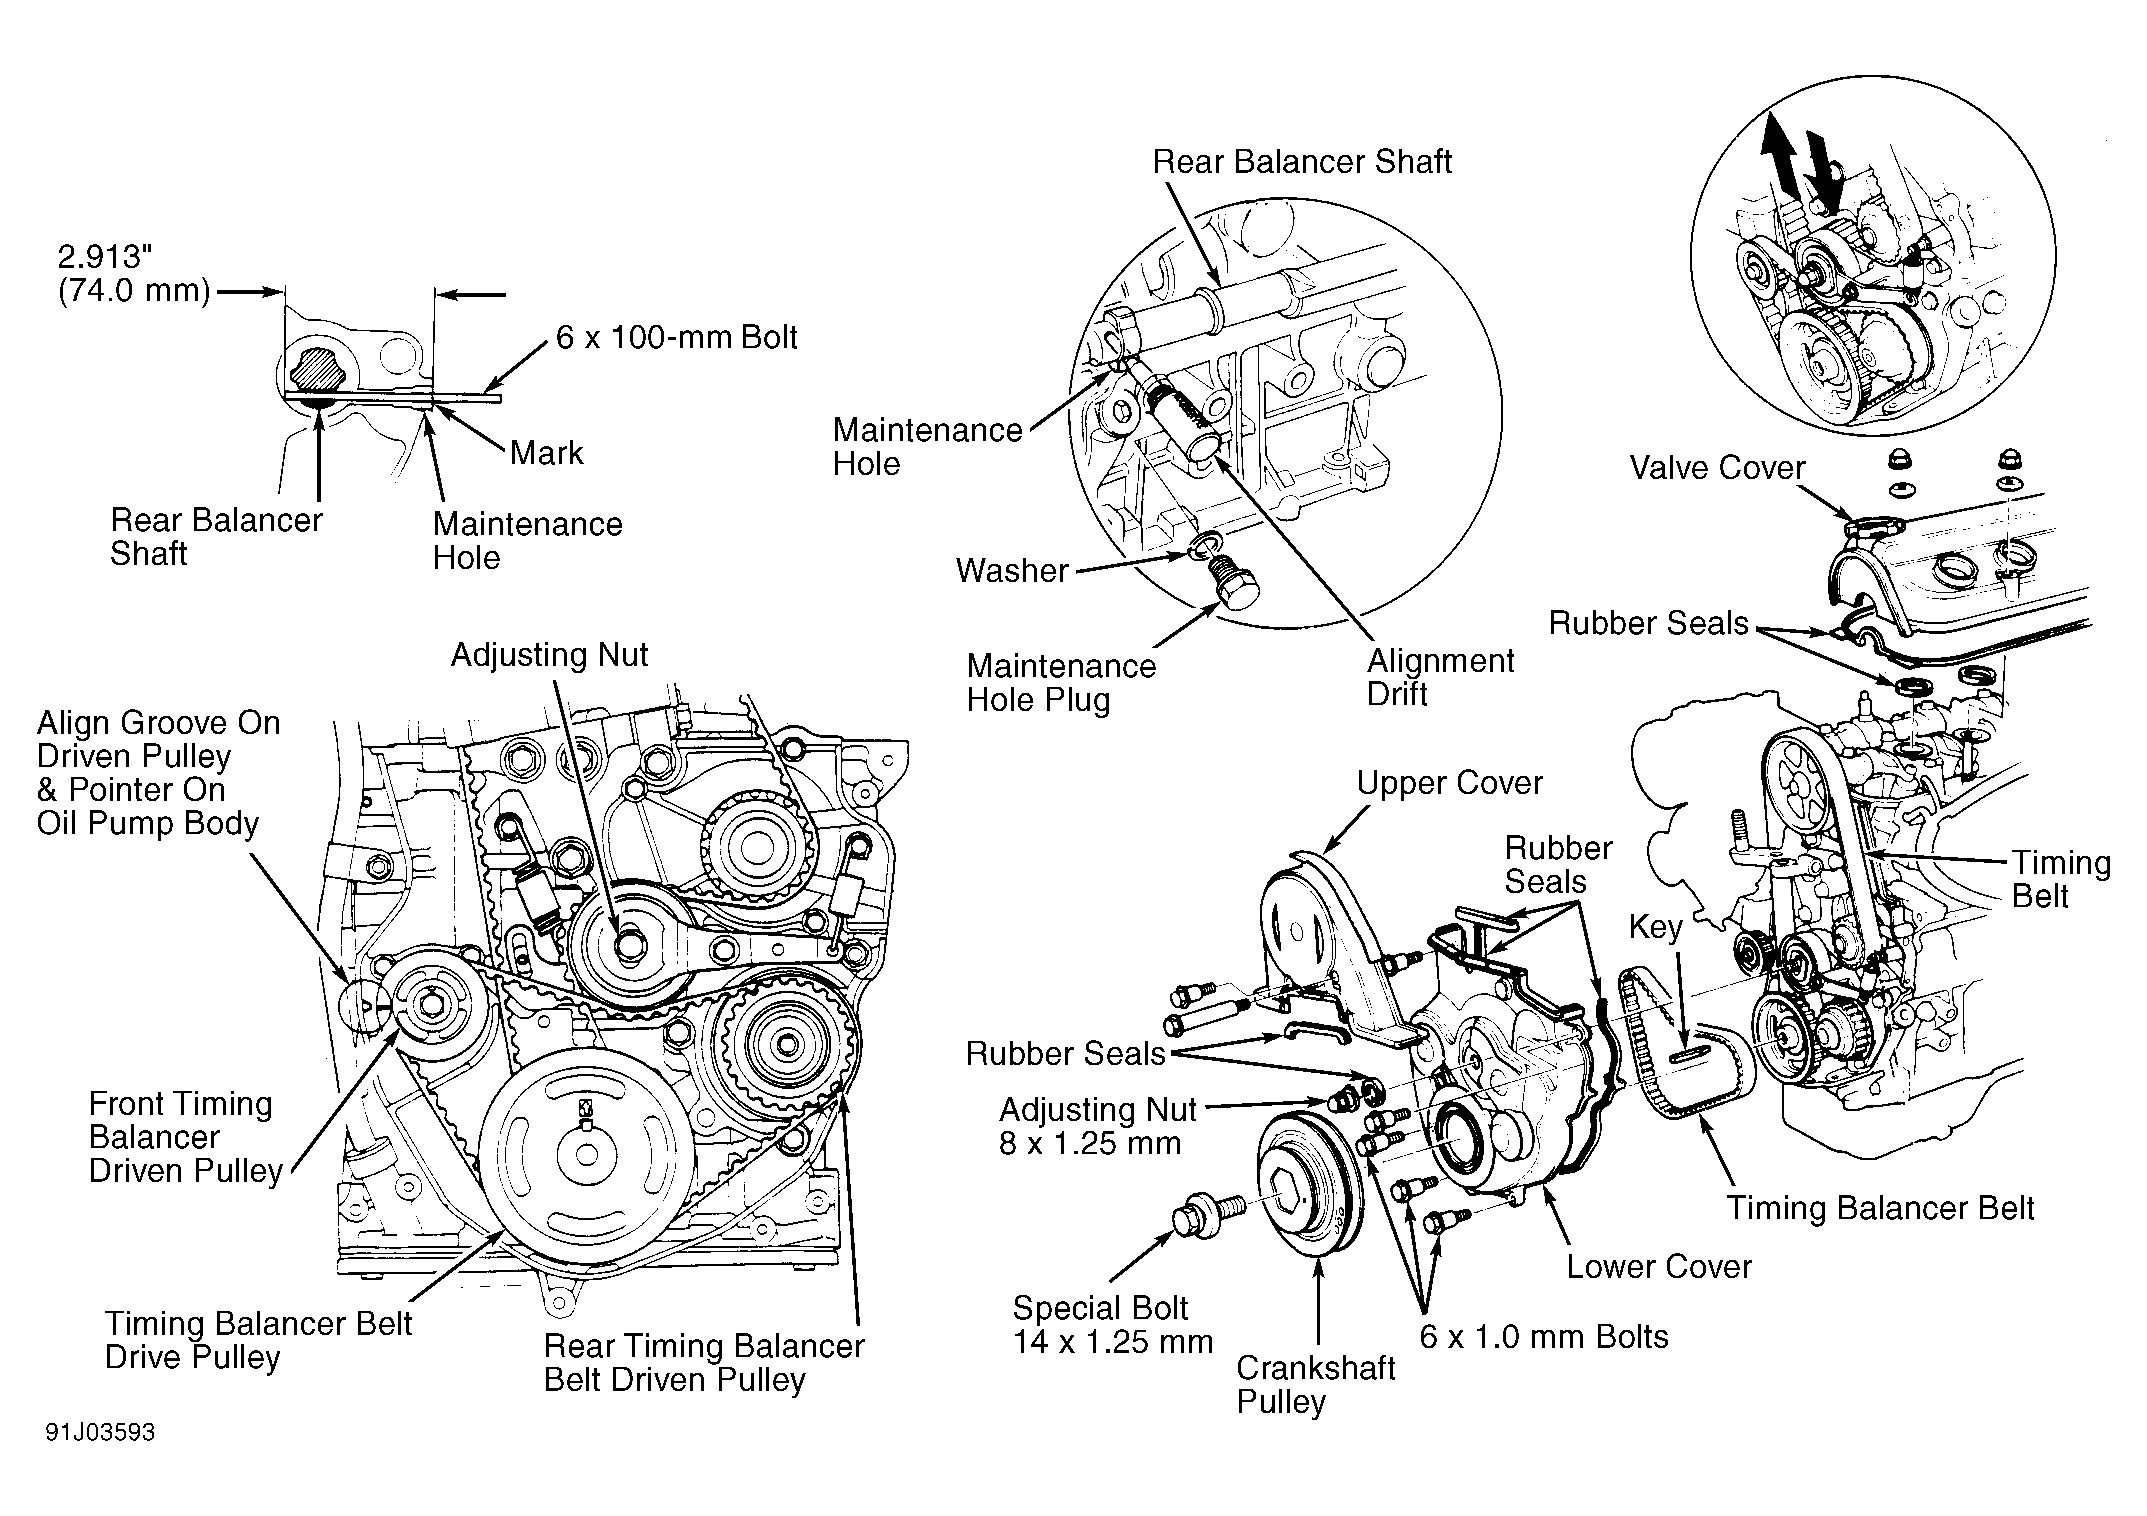 2007 Honda Accord Engine Diagram 91 Honda Accord Fuse Box Of 2007 Honda Accord Engine Diagram